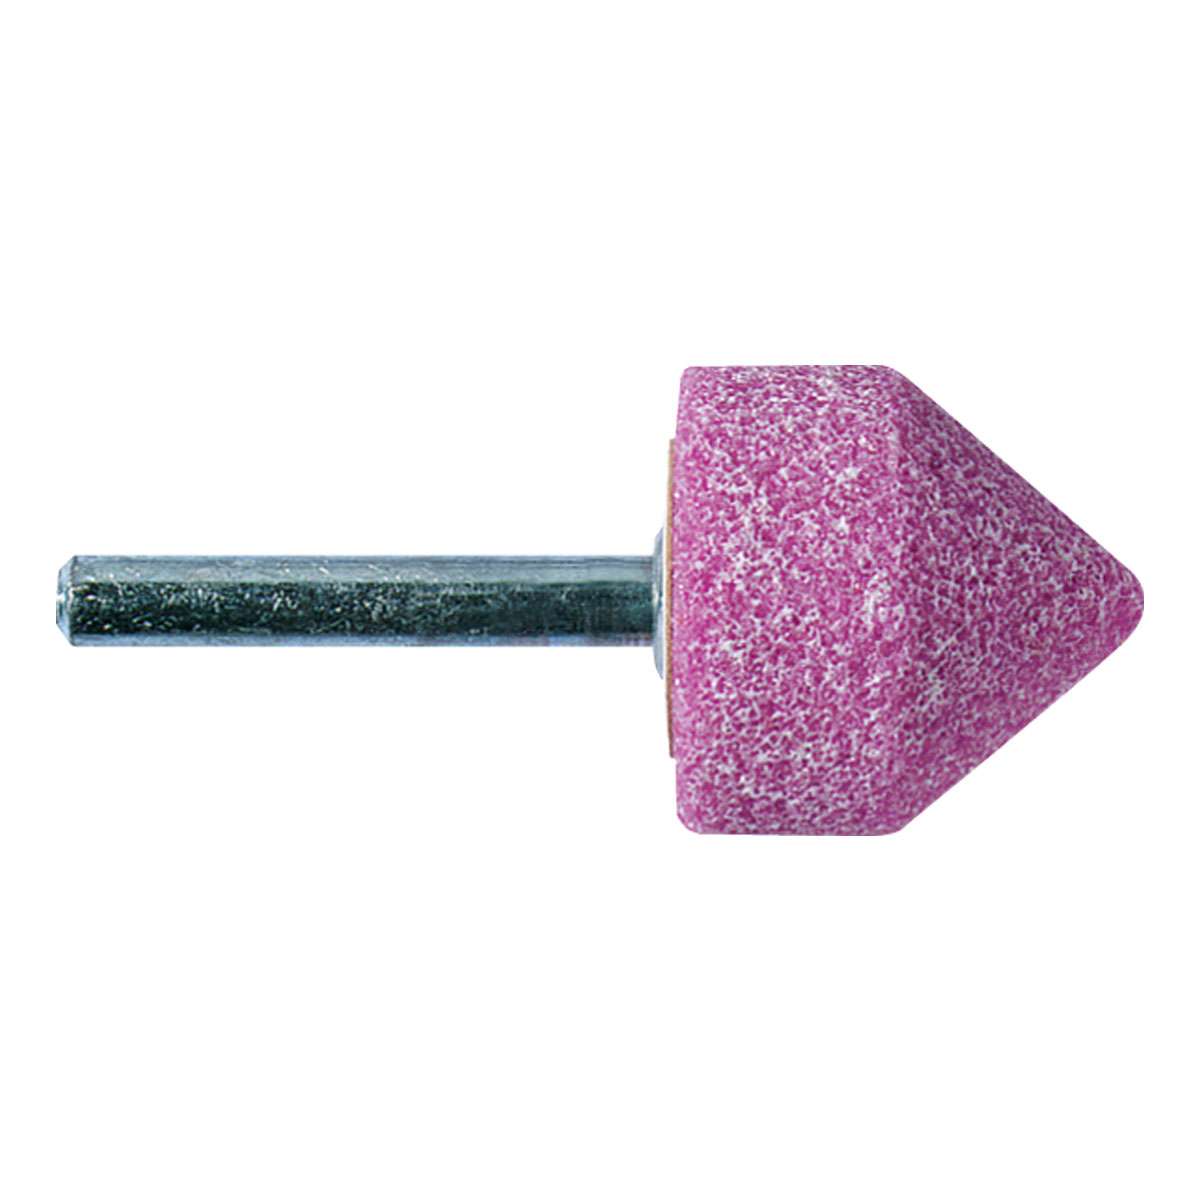 Molette a punta 90 vetrificate rosa al corindone D.(8x10-30x30) G6 Rosver 25 pz